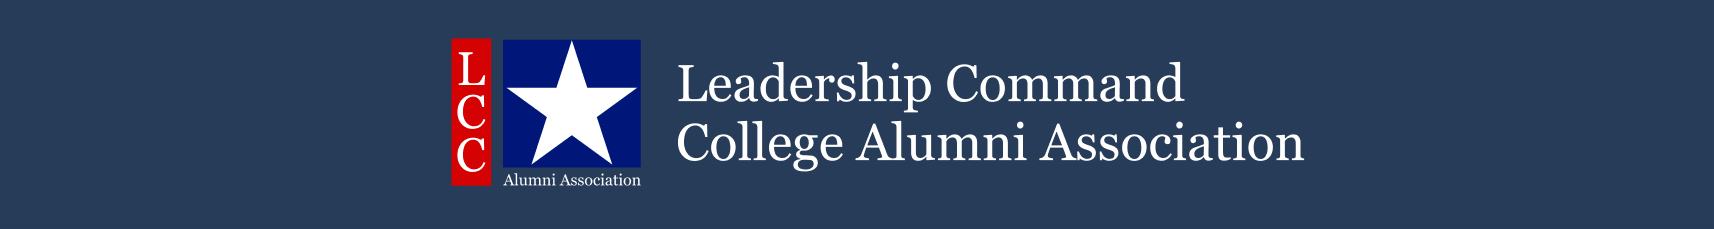 Leadership Command College Alumni Association (LCCAA)